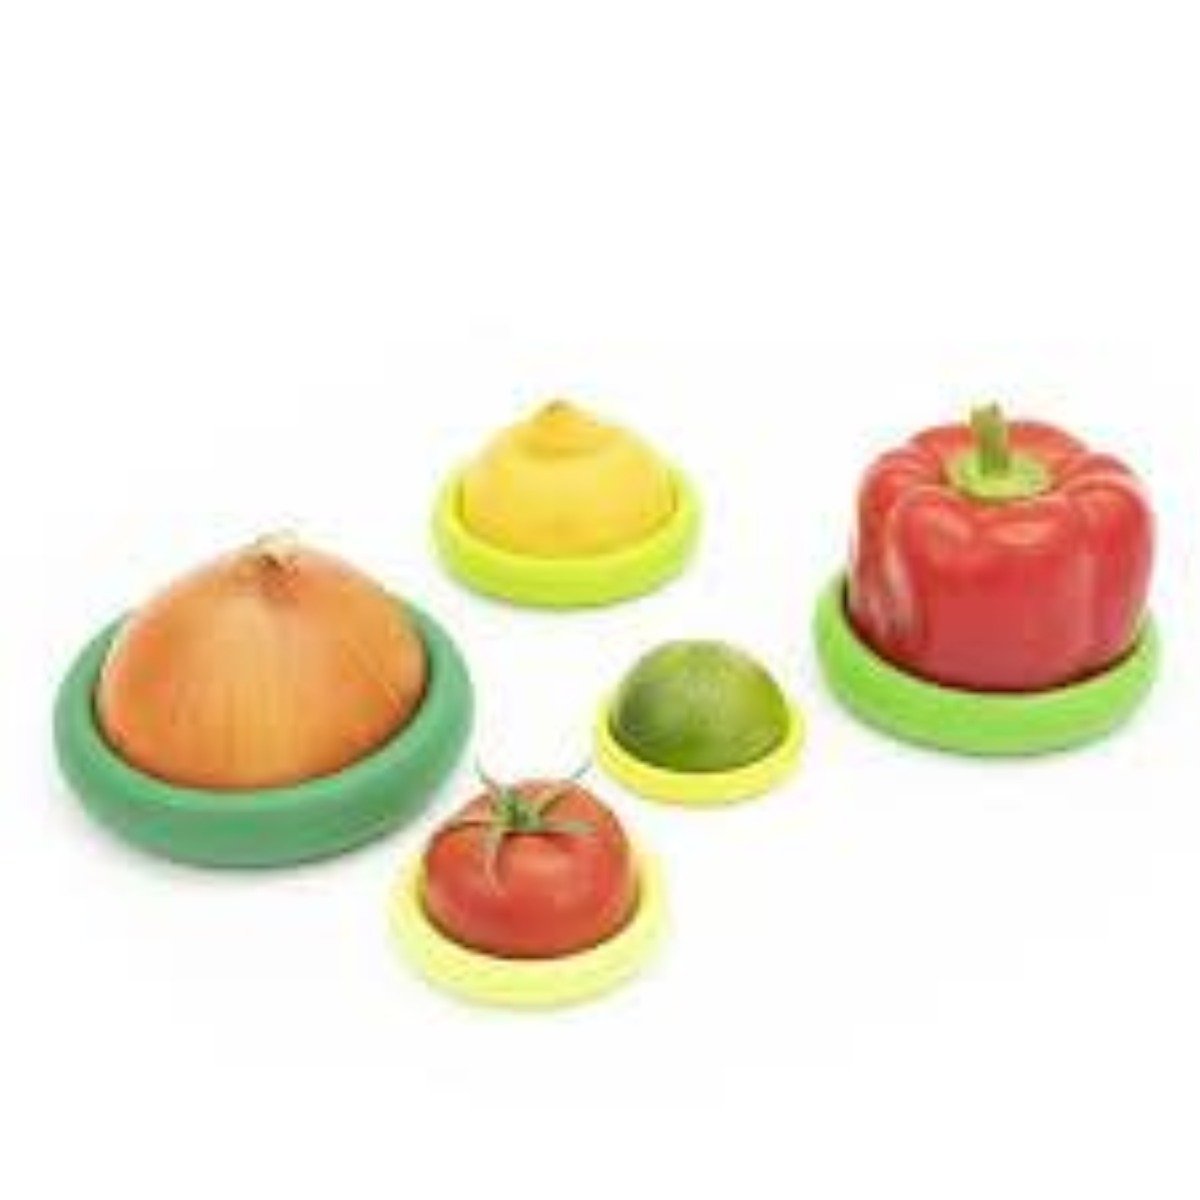 Food Huggers 2pc Reusable Silicone Citrus Savers | BPA Free & Dishwasher  Safe | Fruit Produce Storage for Orange, Lemon, Lime, Banana, Cans & More |  2